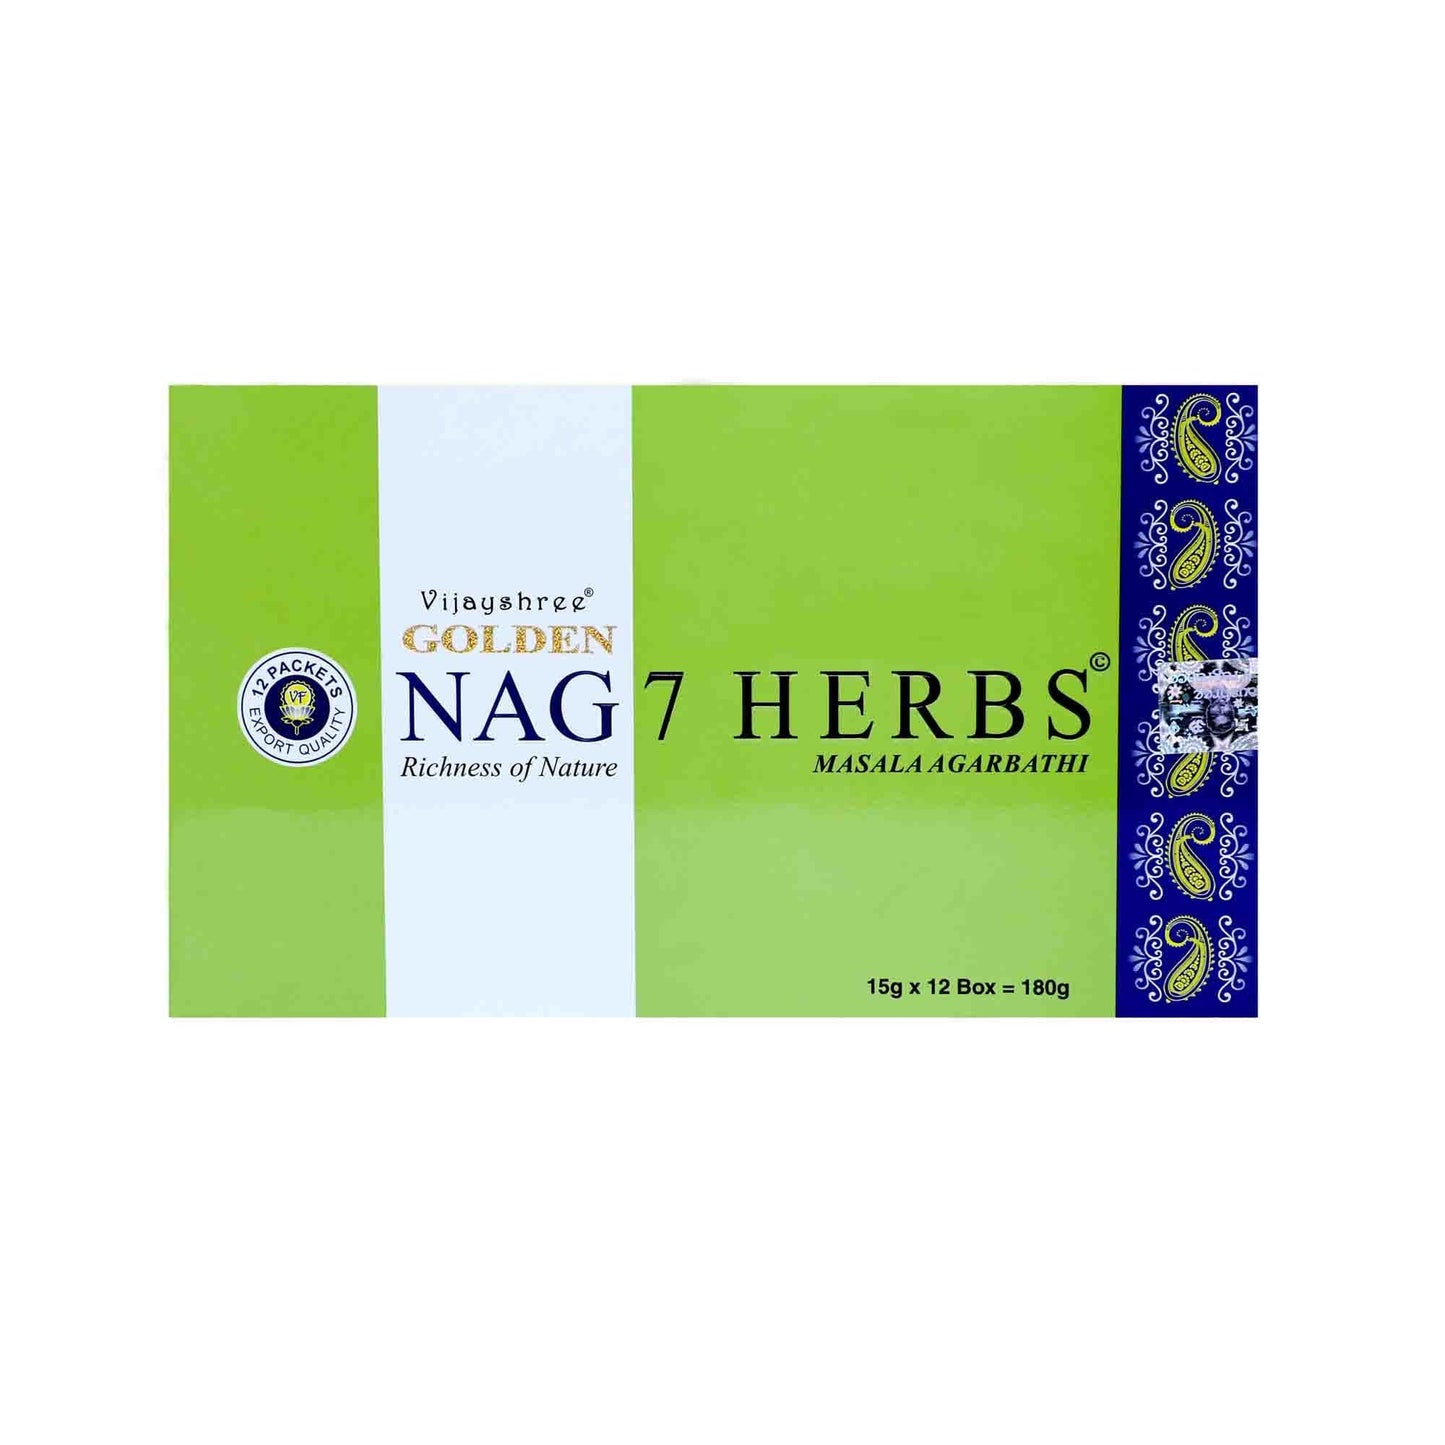 Vijayshree Nag 7 Herbs Masala Incense Sticks.